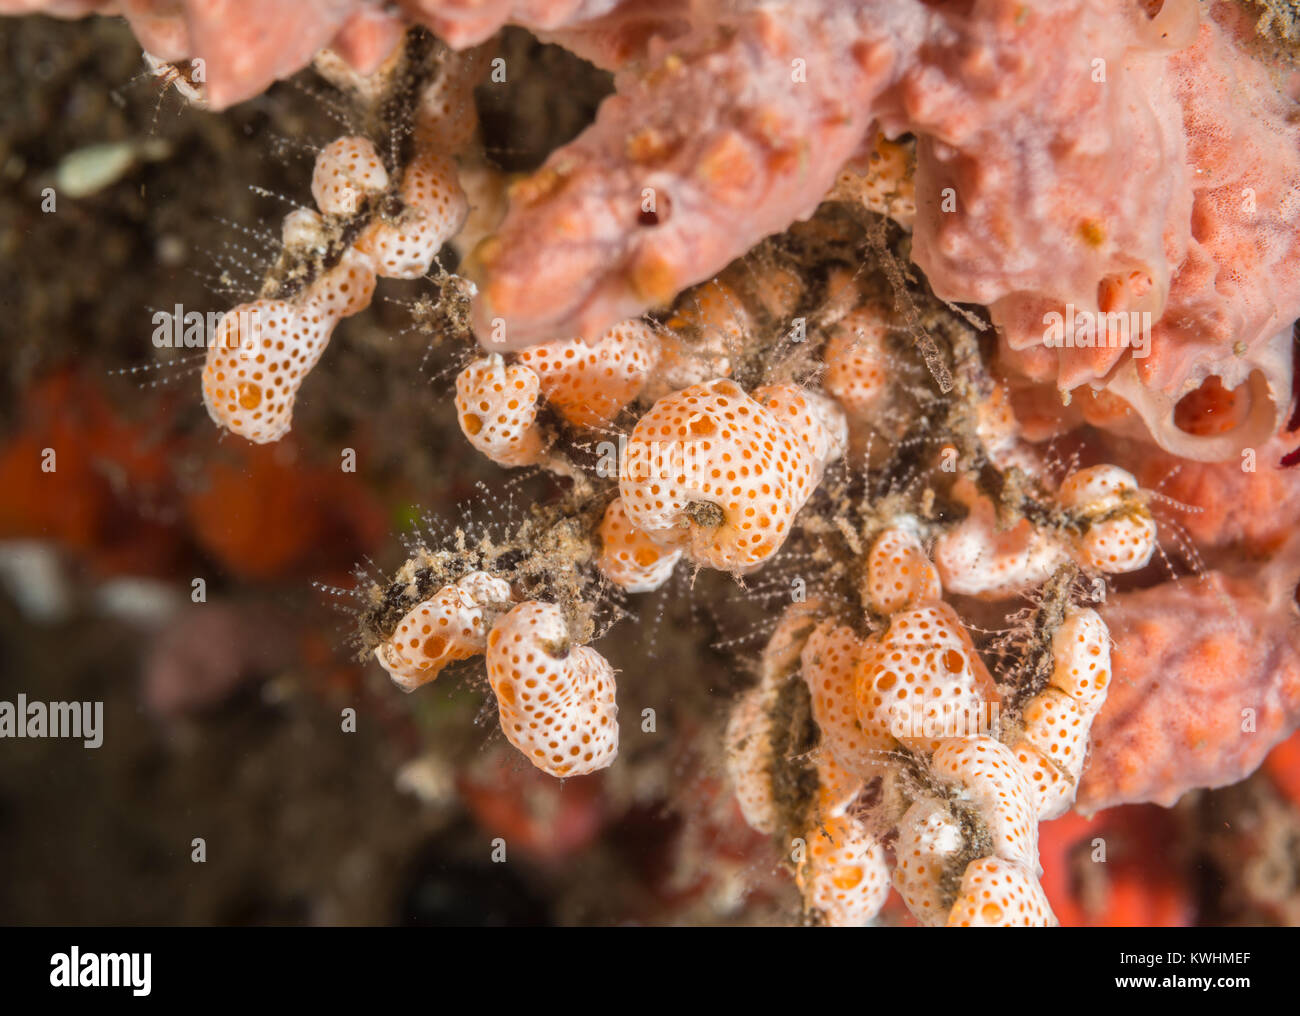 Sponge and tunicates Stock Photo